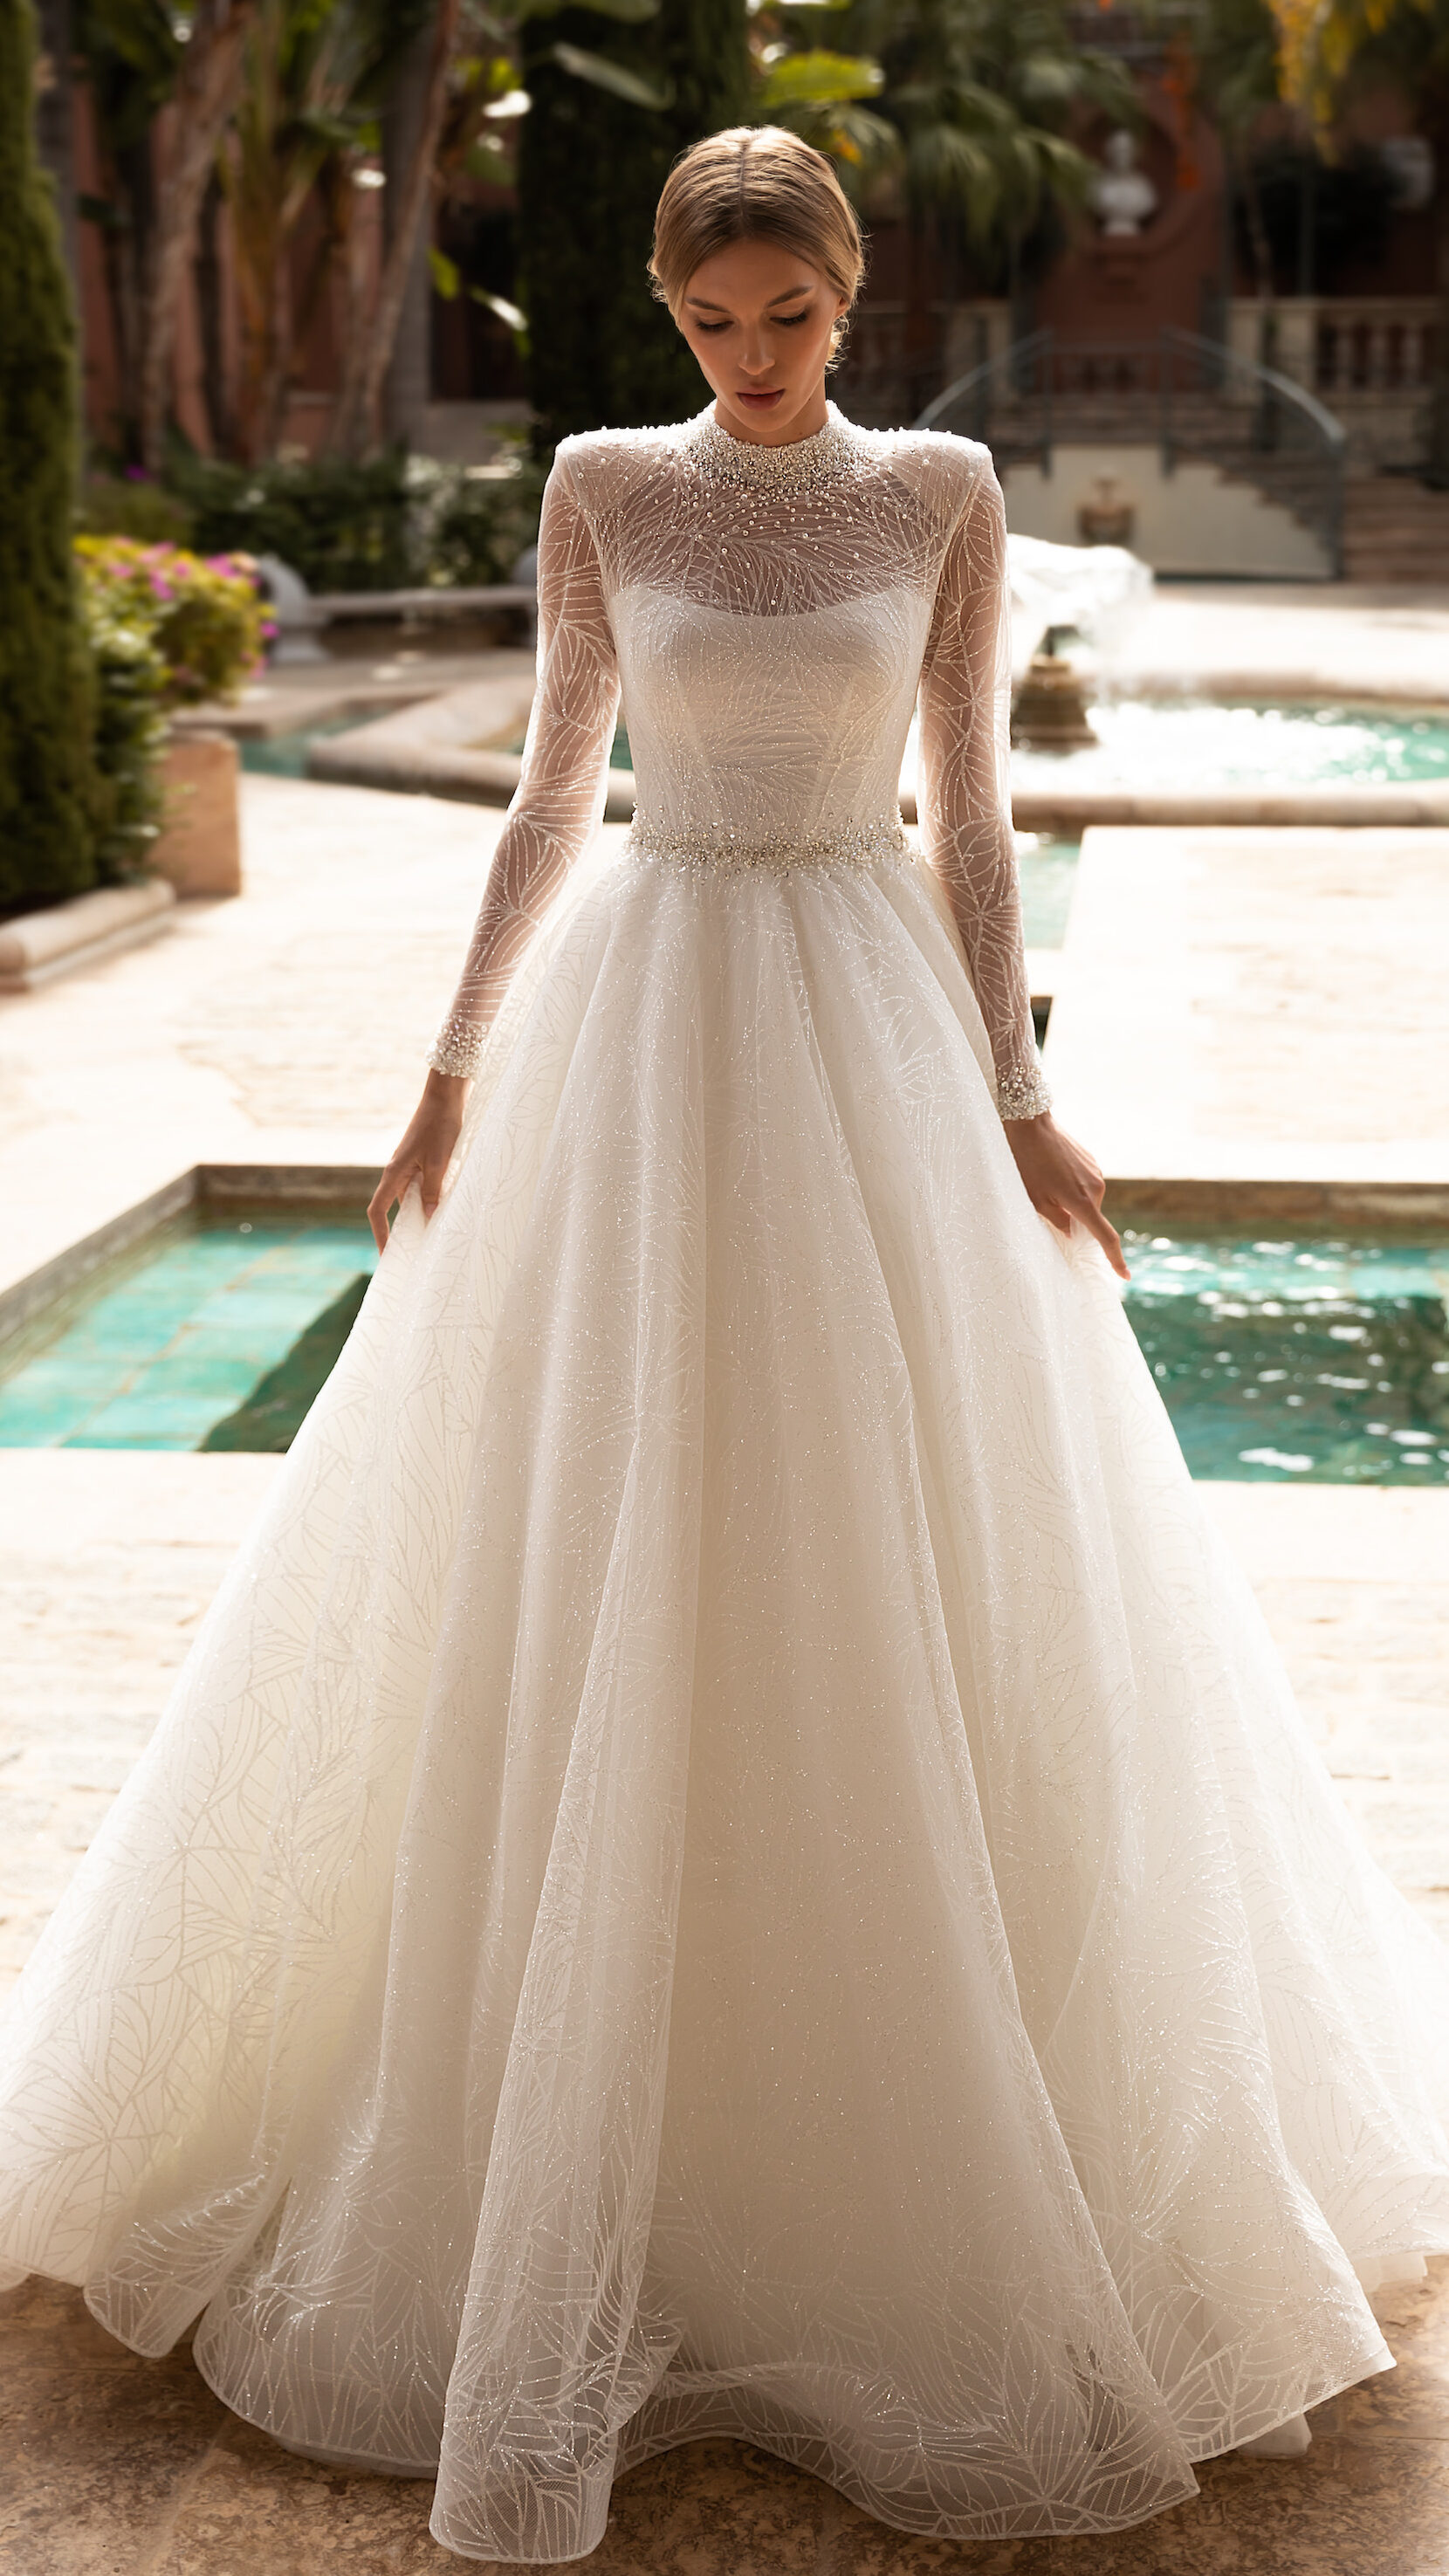 Frontera by Armonia wedding dress